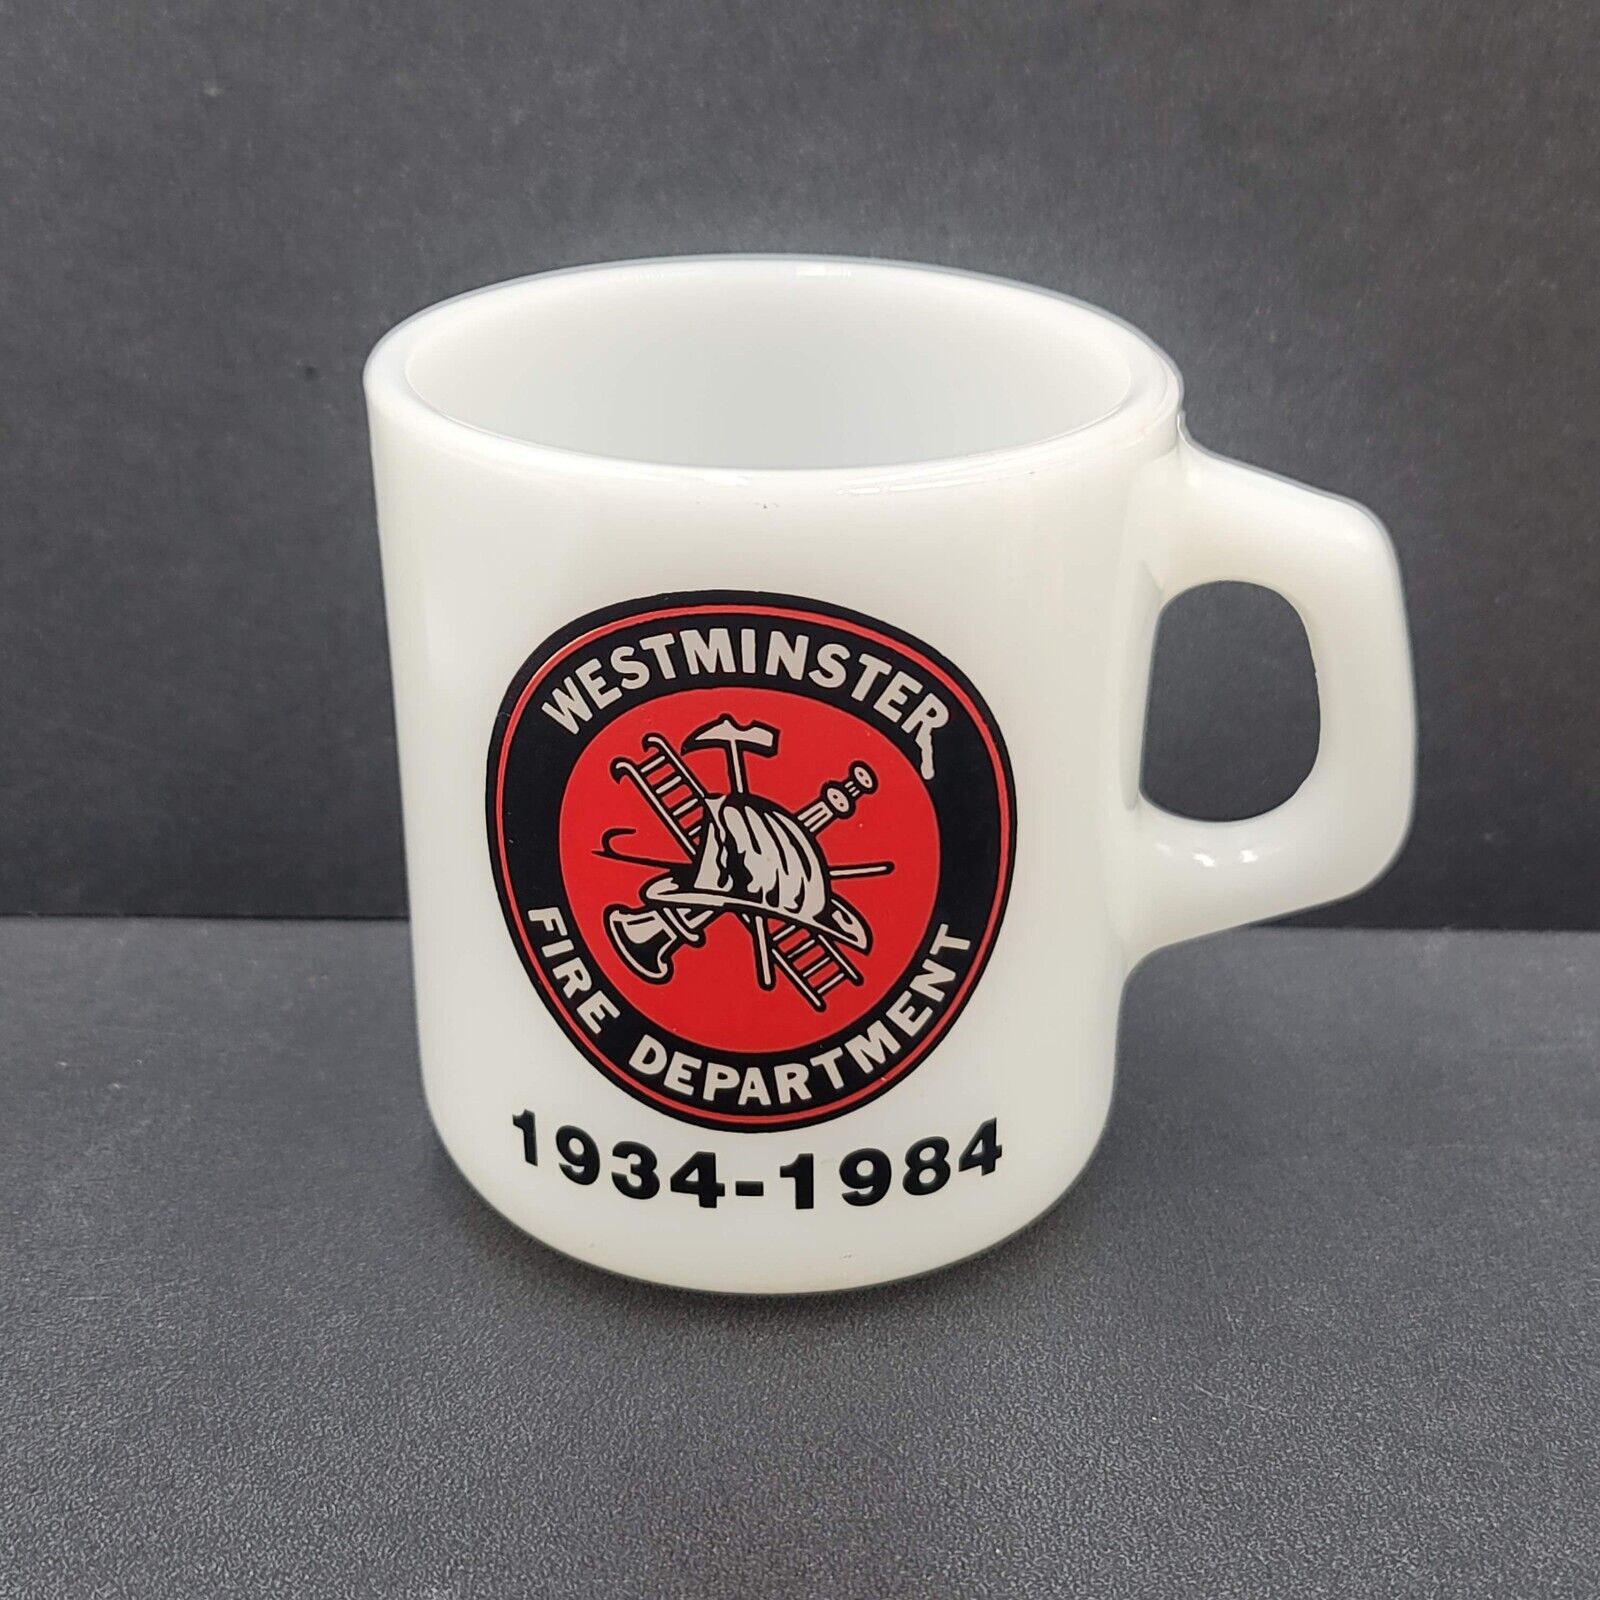 Vintage Westminster Fire Department Coffee Mug Galaxy Milk Glass 1984